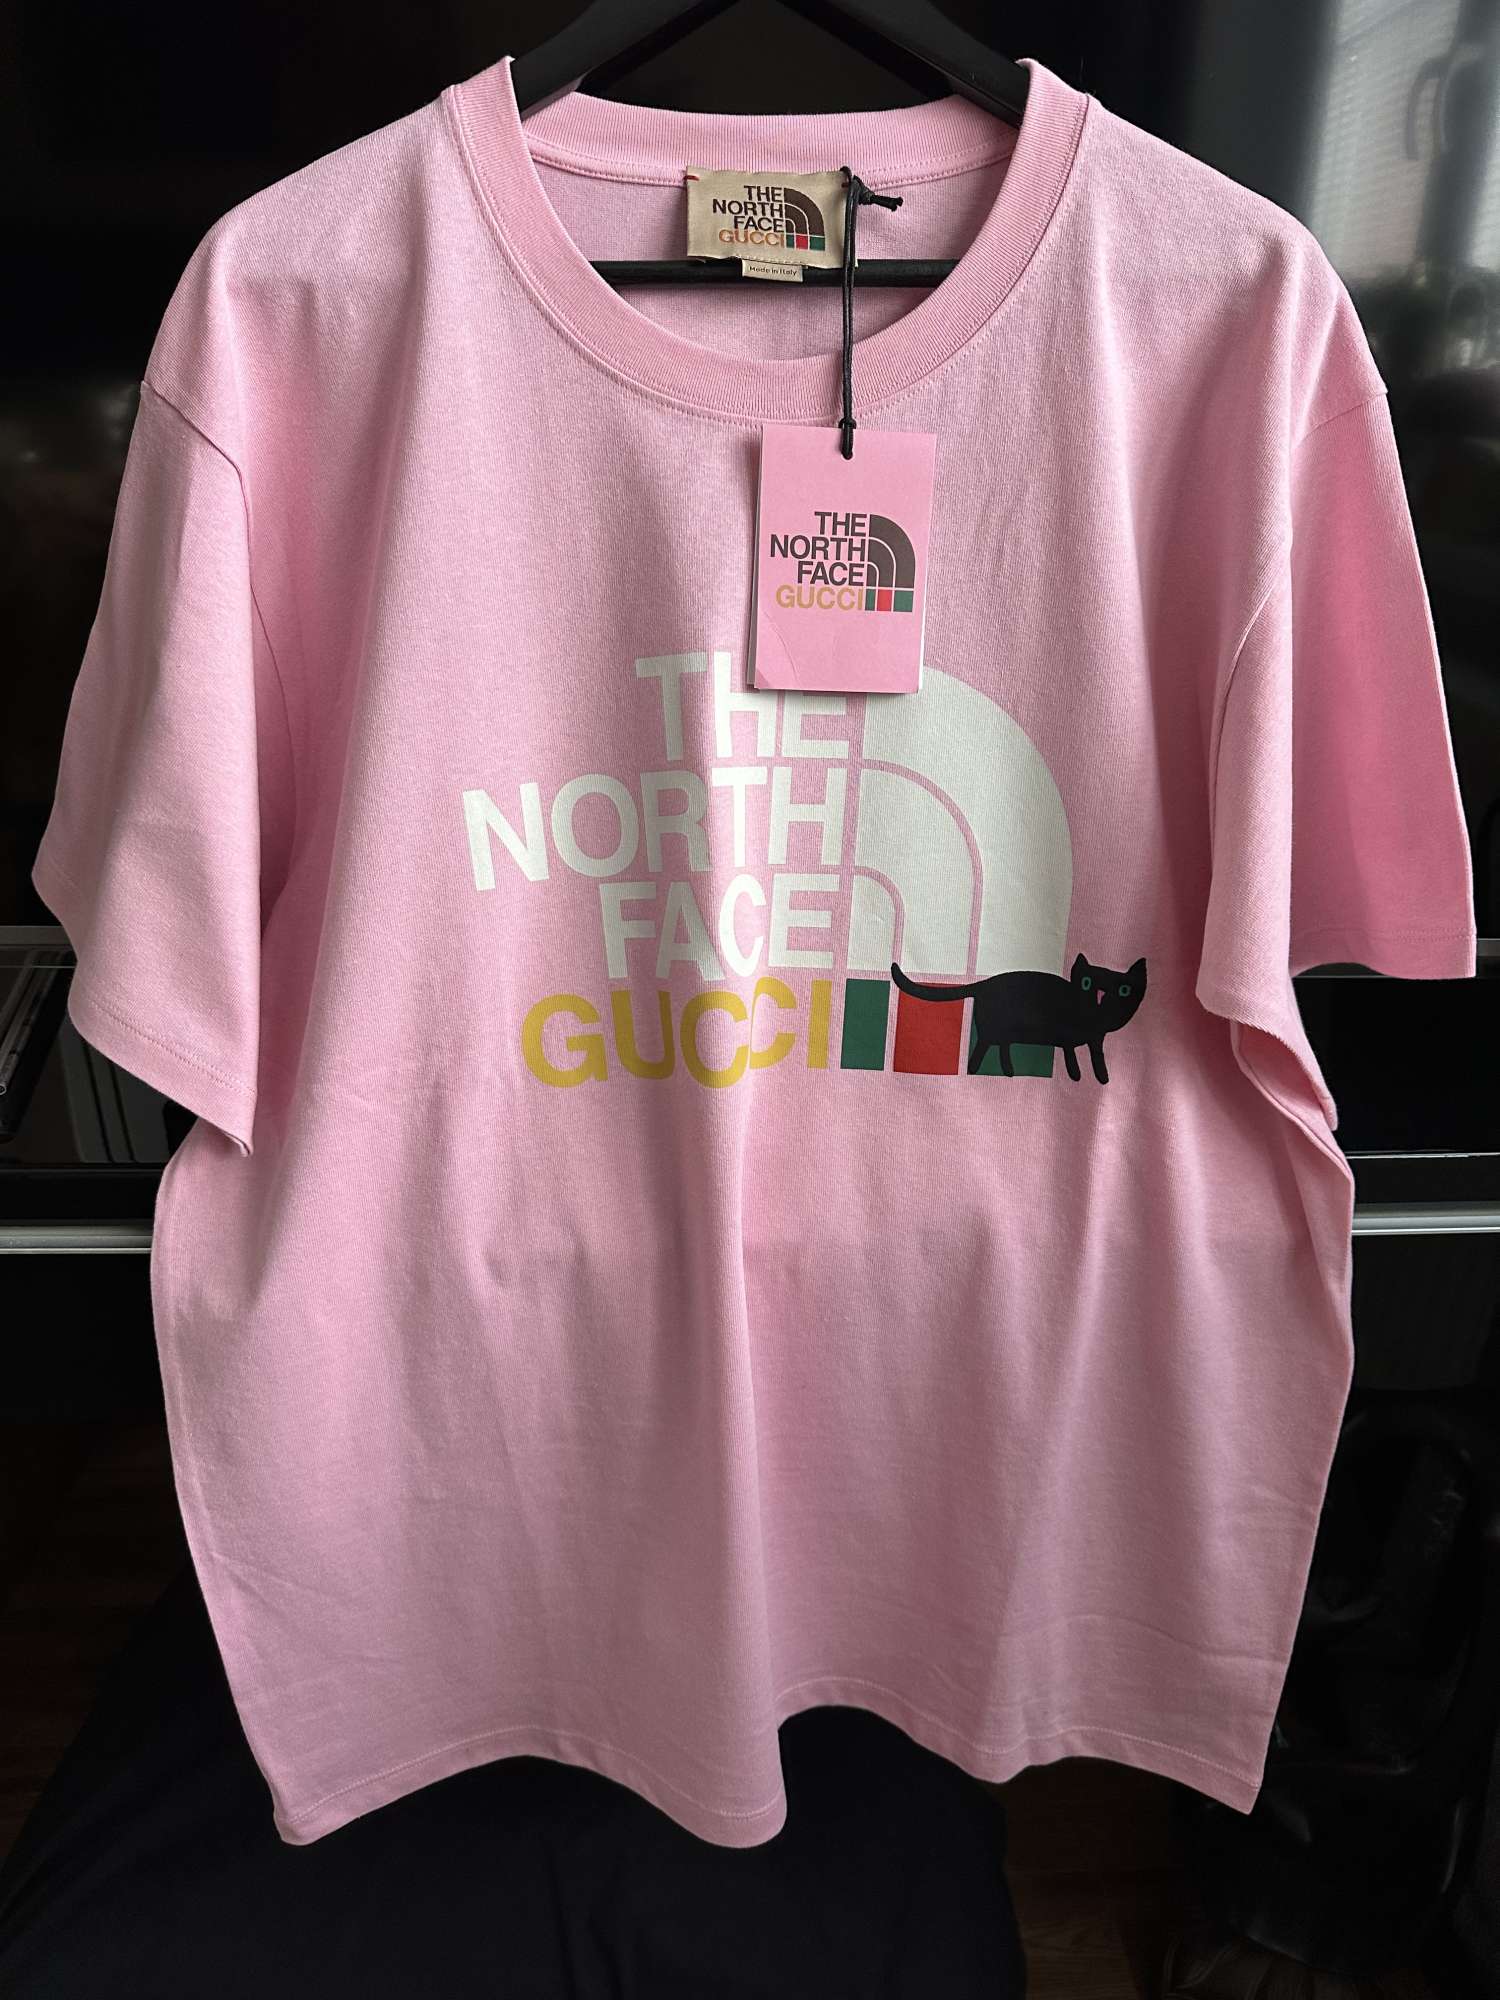 Gucci limitka North Face tričko